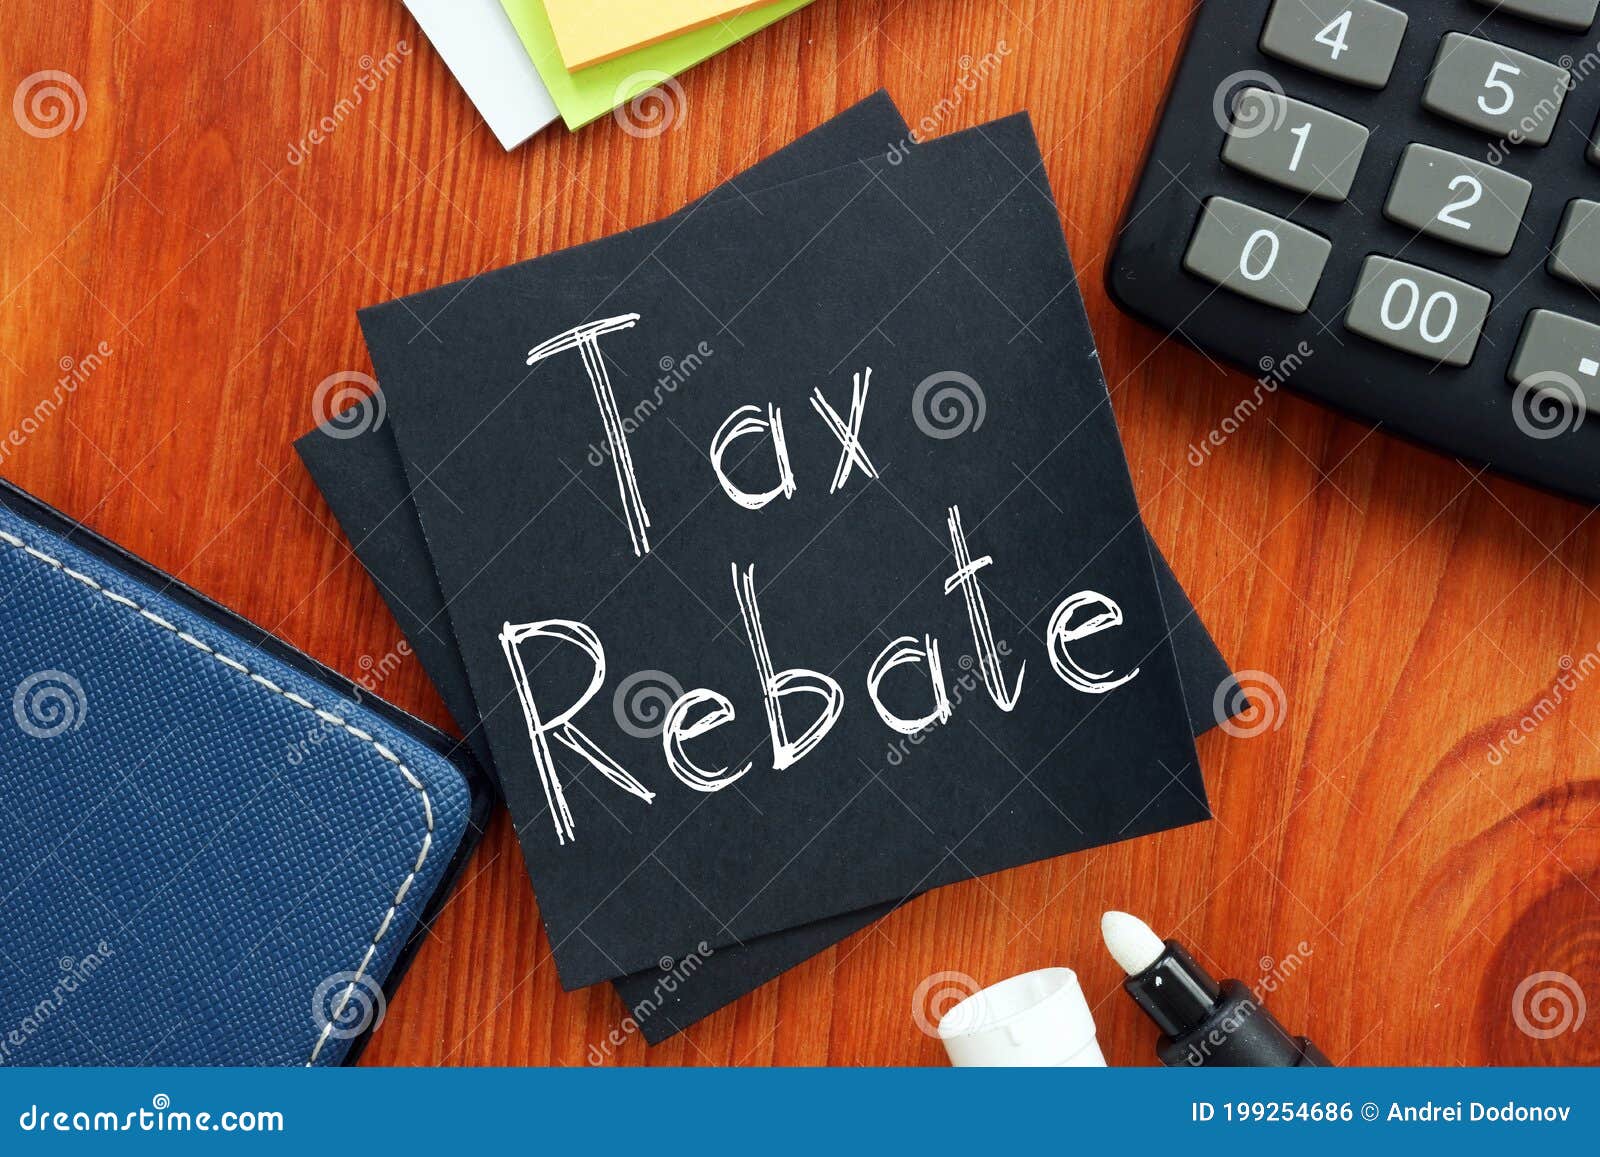 Business Tax Rebate